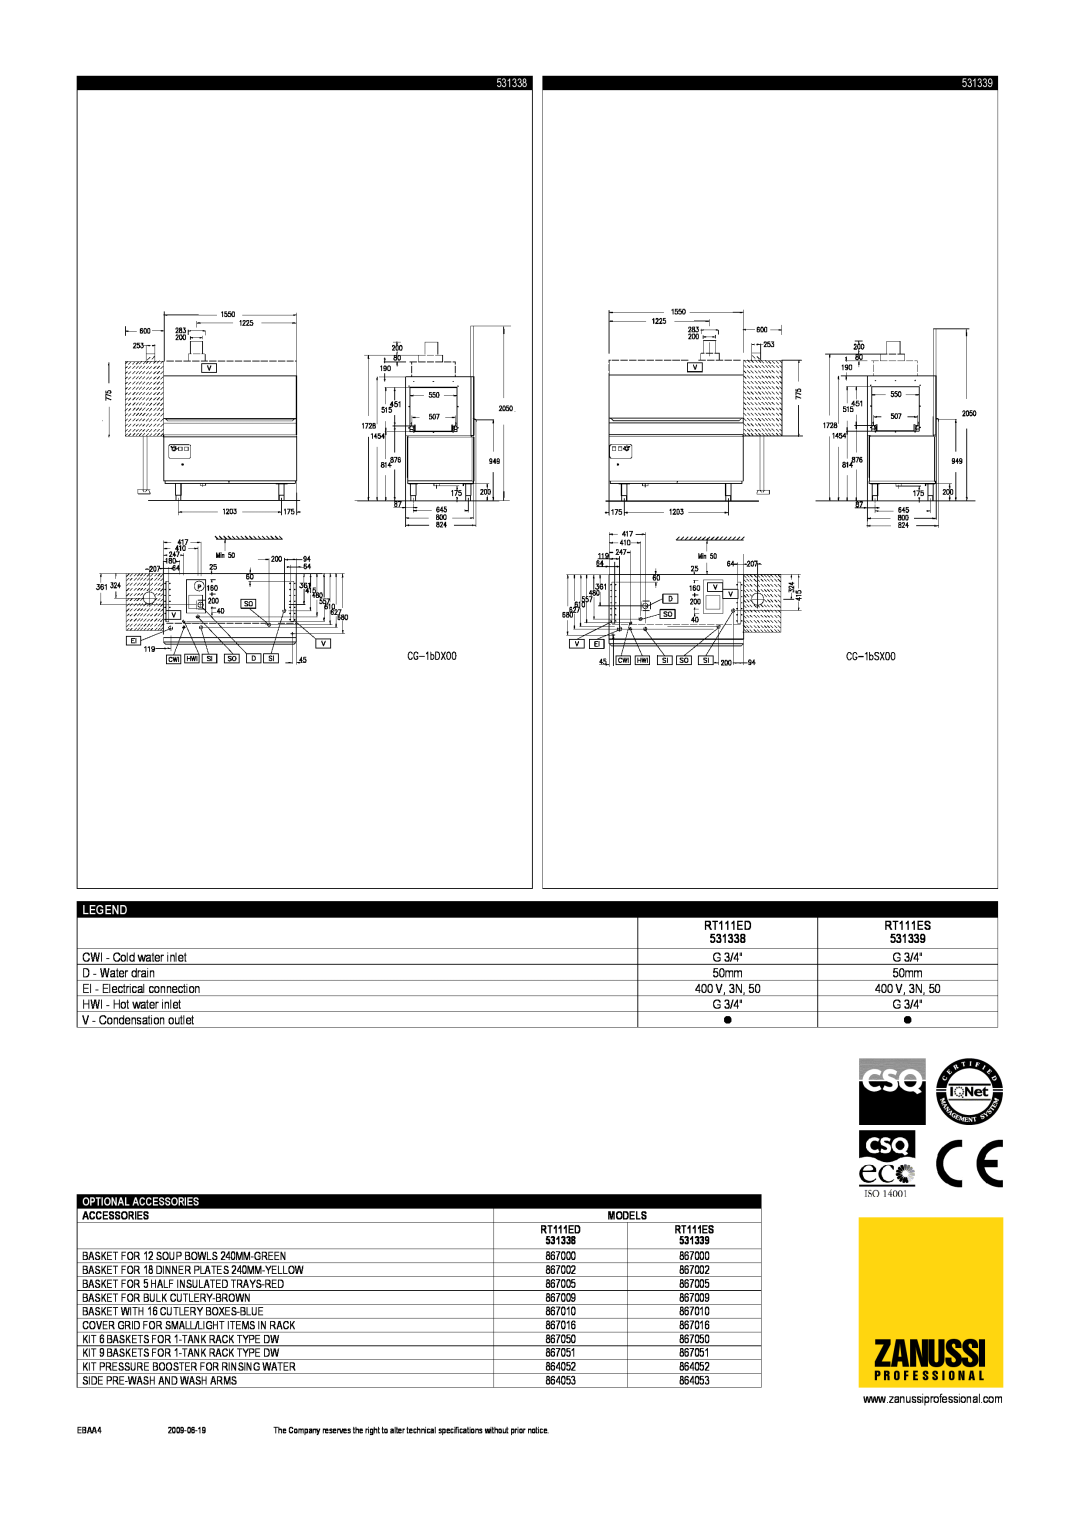 Zanussi RT111ED, RT 111 dimensions Zanussi, RT111ES, 531338, 531339, Optional Accessories, Models 